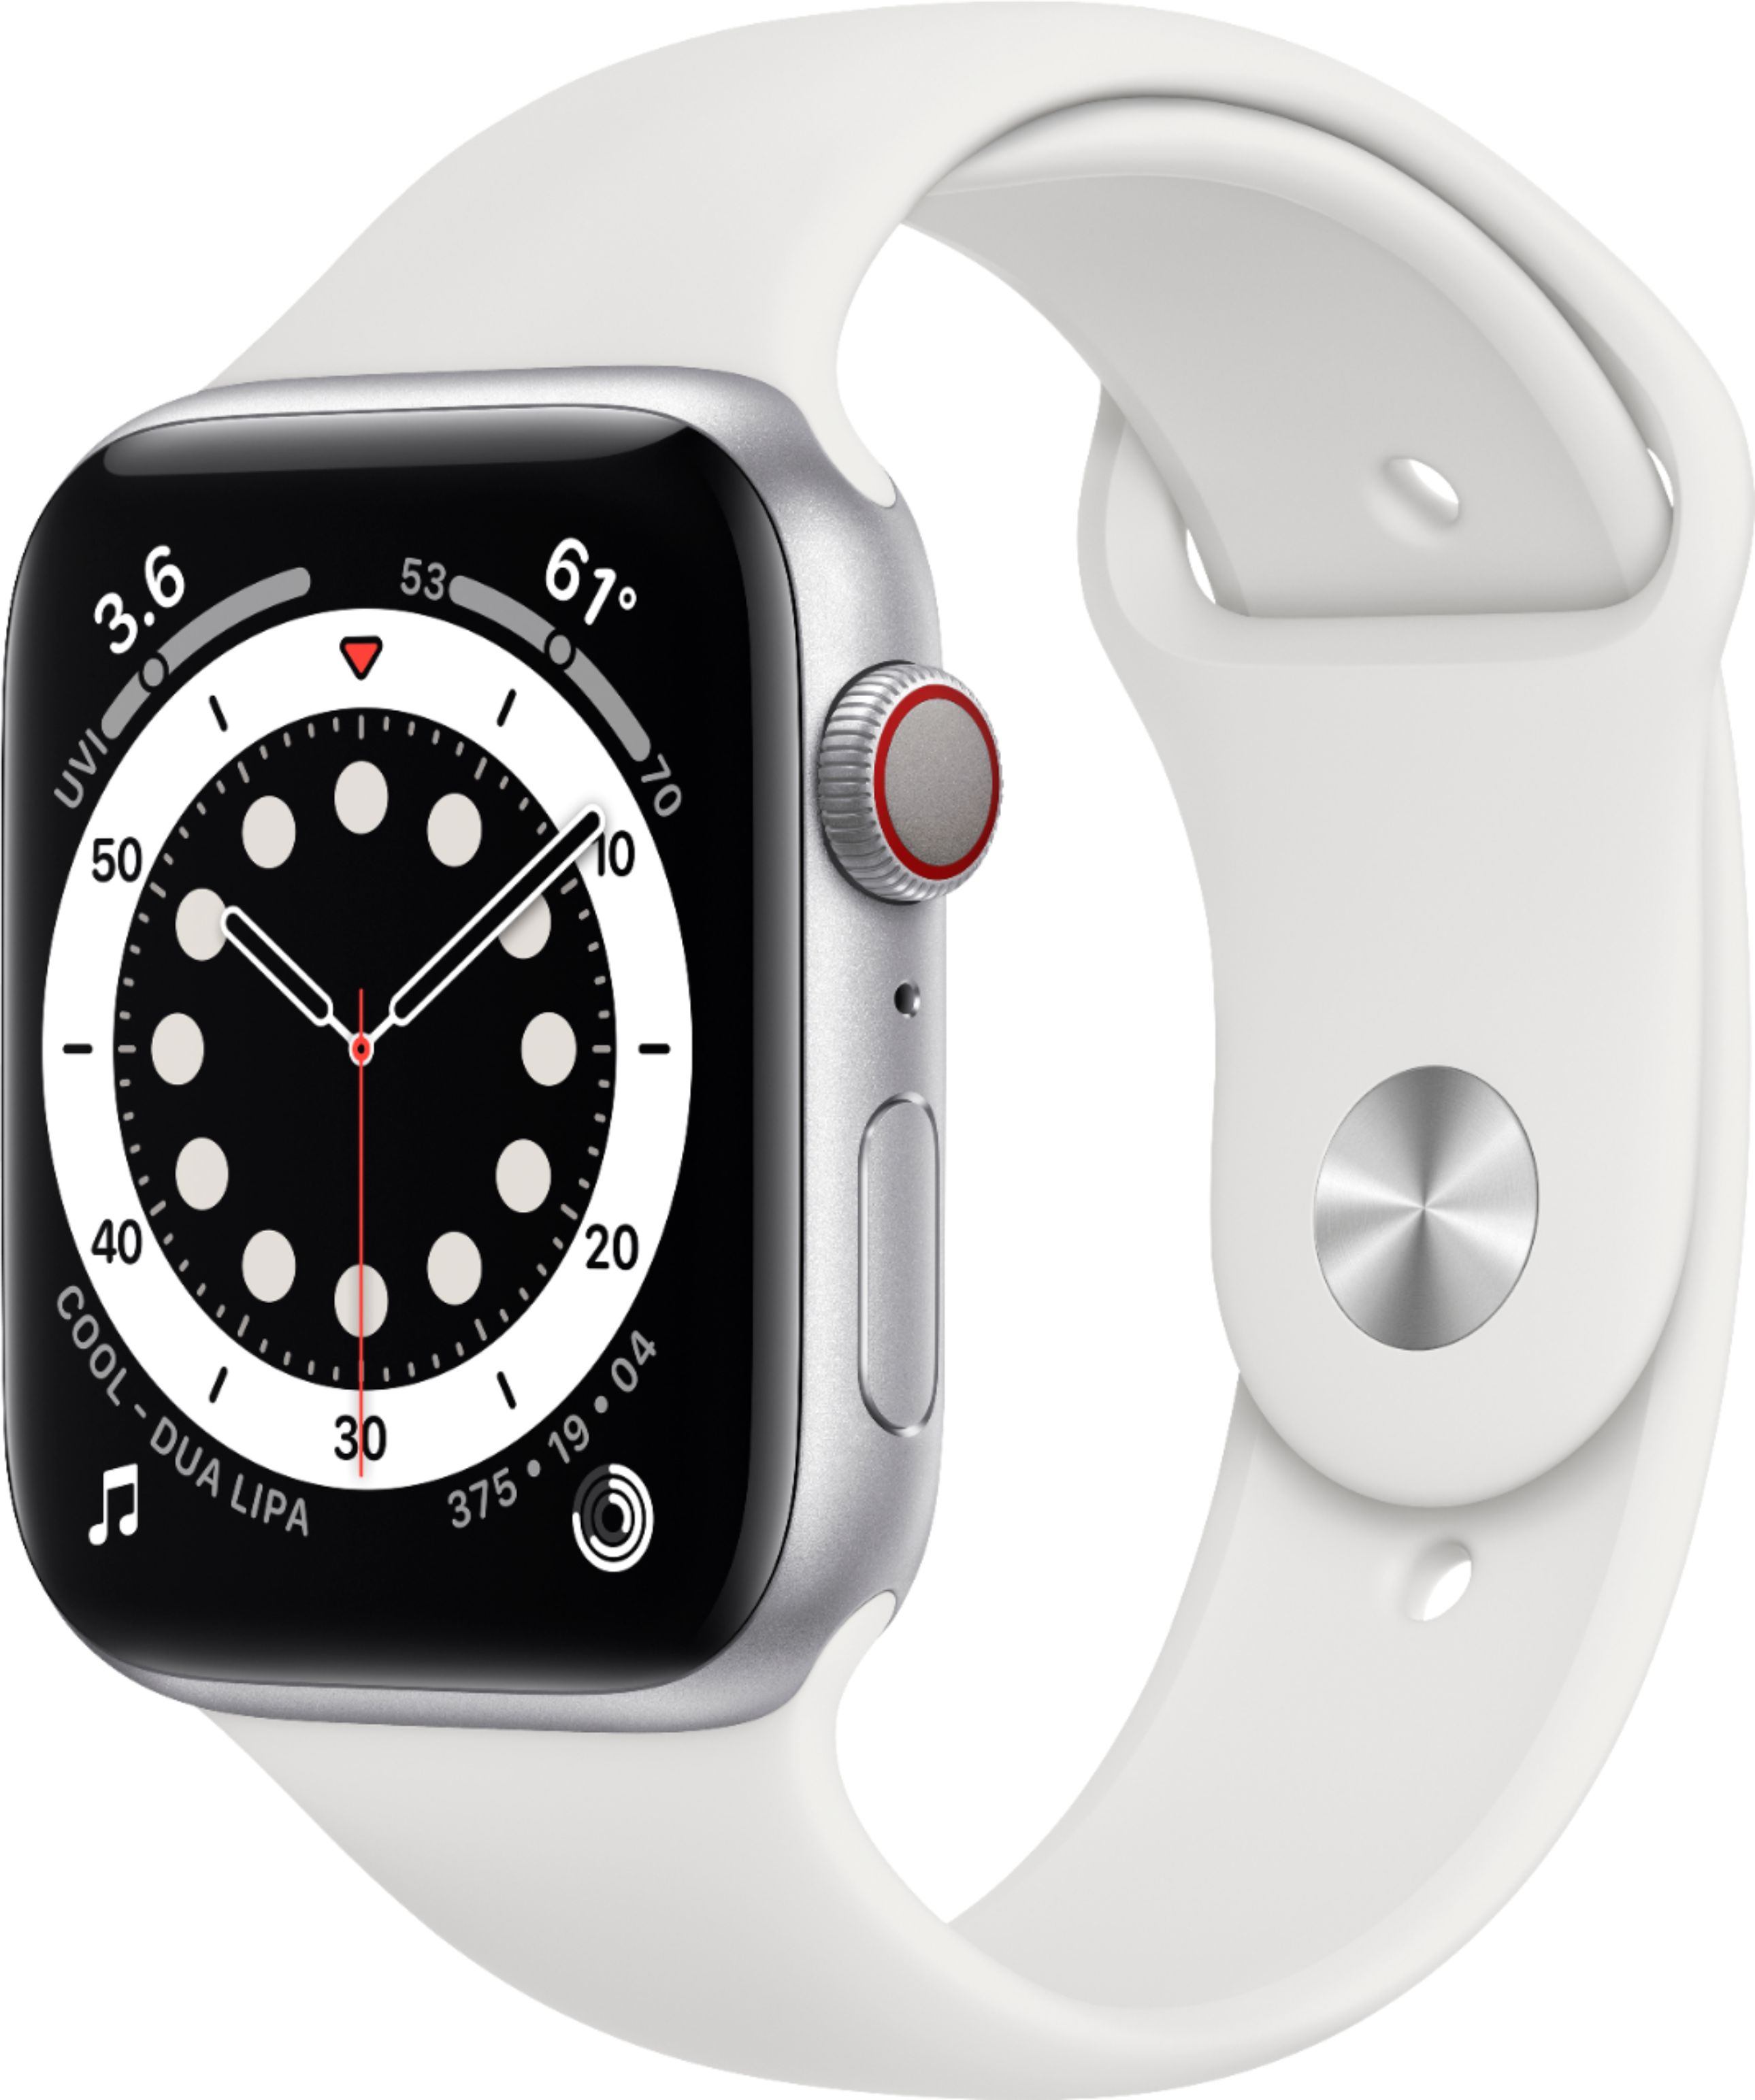 Apple Watch Series 6 44mm スペースグレイ アルミニウ